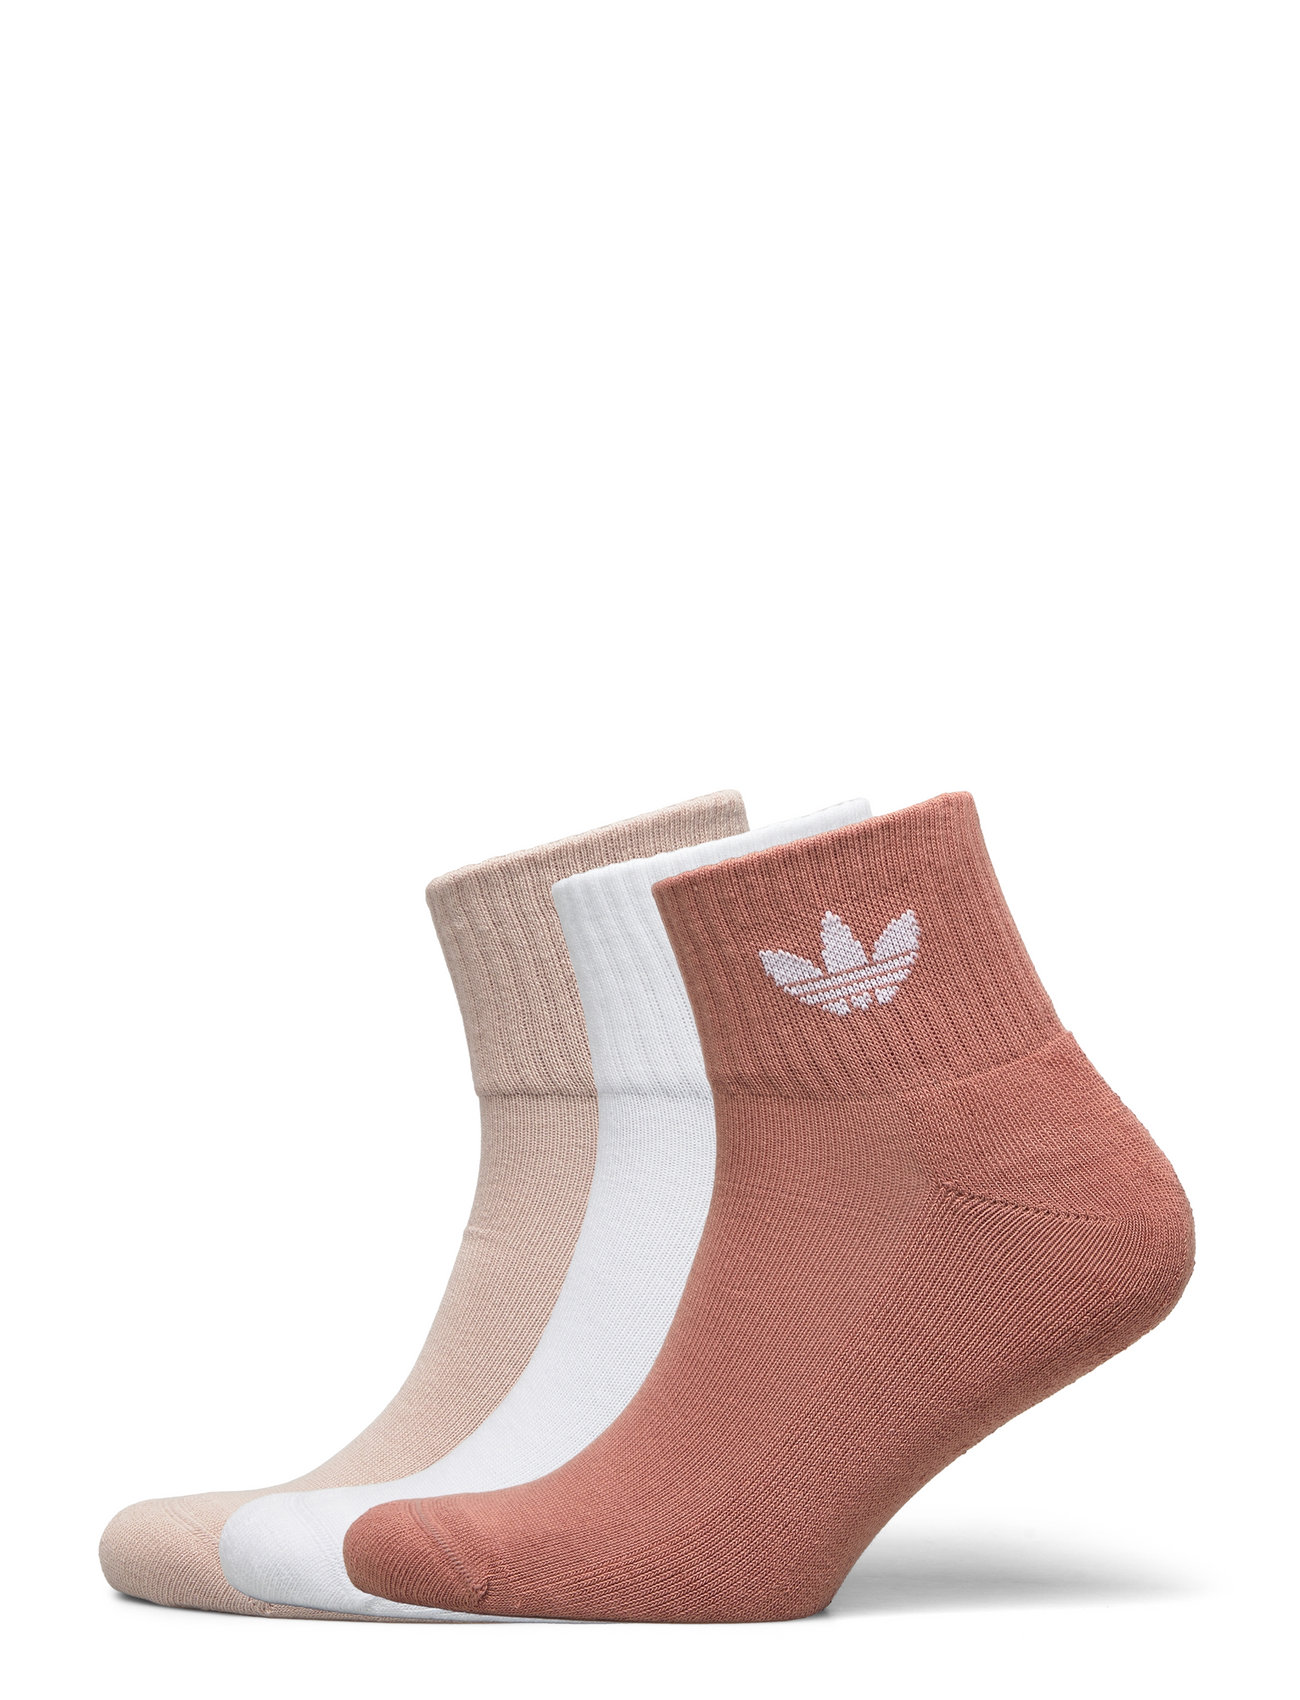 adidas Originals Mid Ankle Sck - Ankle socks | Boozt.com